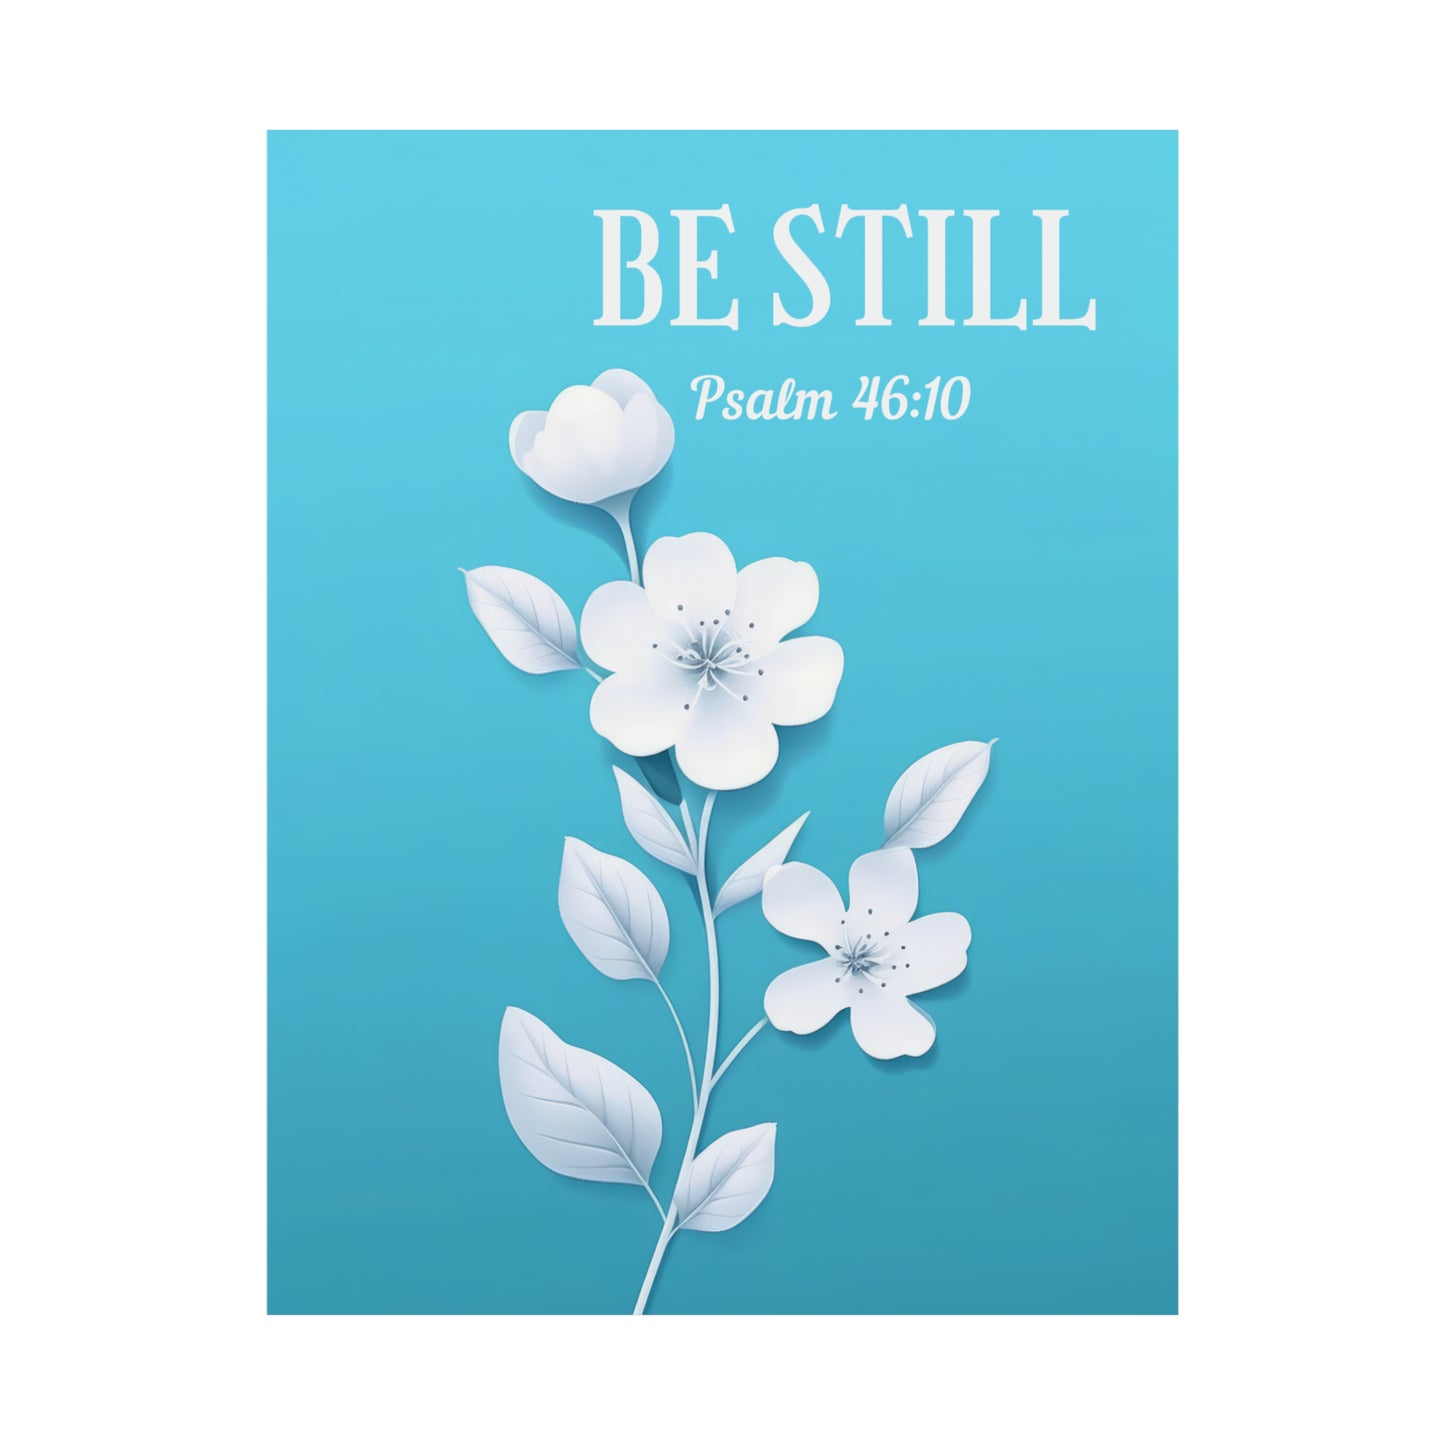 Be Still - Floral Art Print